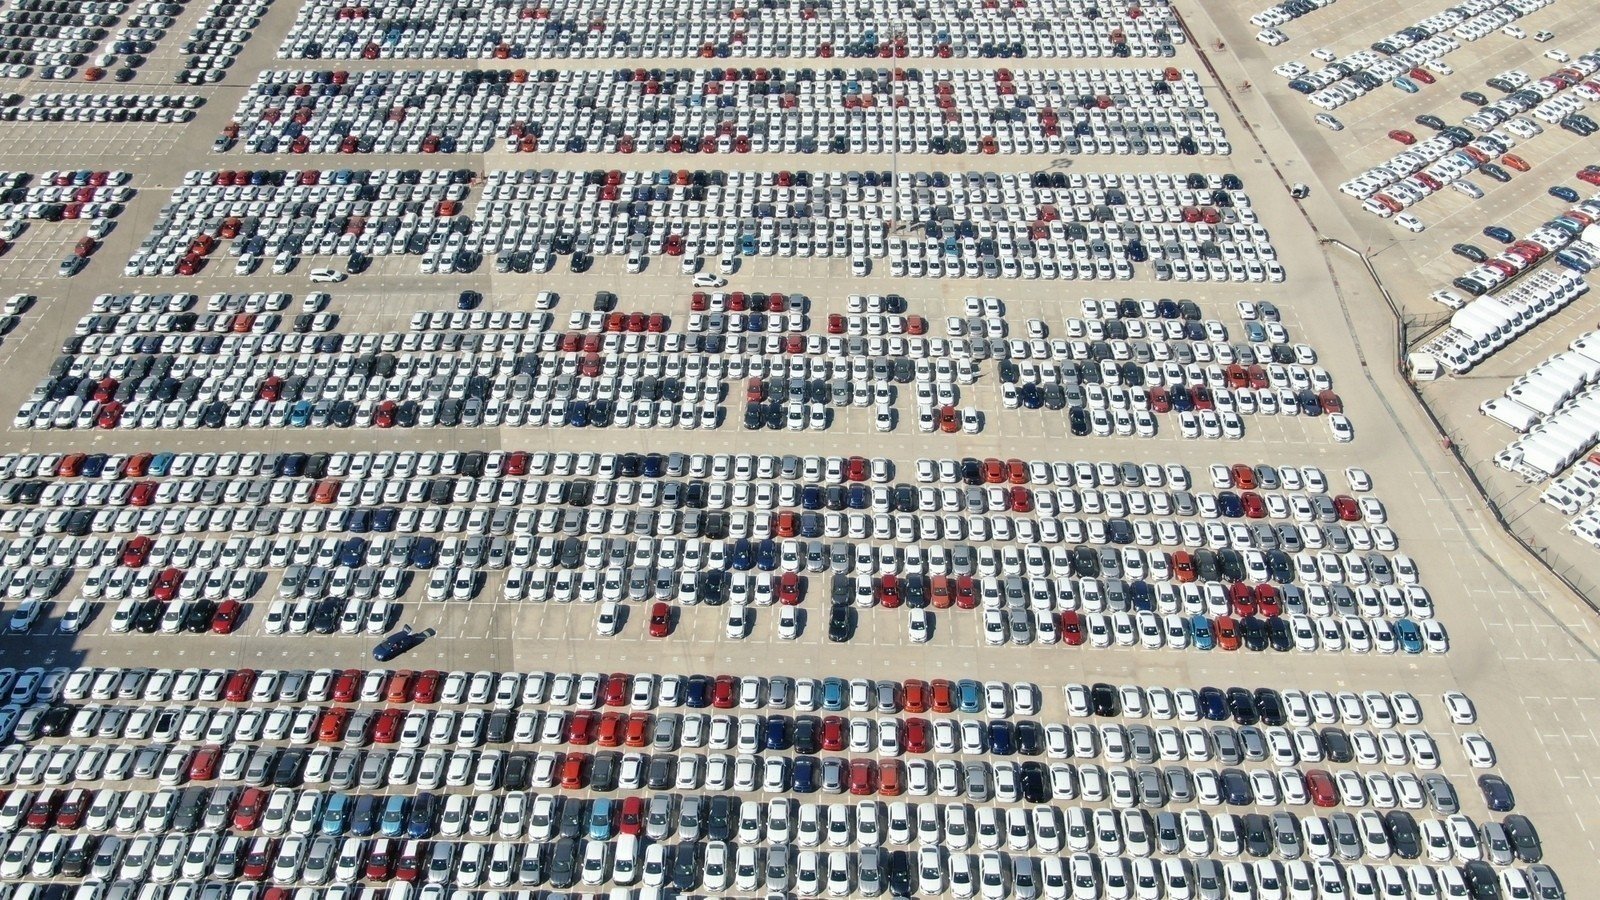 Cars sit parked at a plant in northwestern Bursa province, Turkey, Oct. 3, 2020. (IHA Photo)